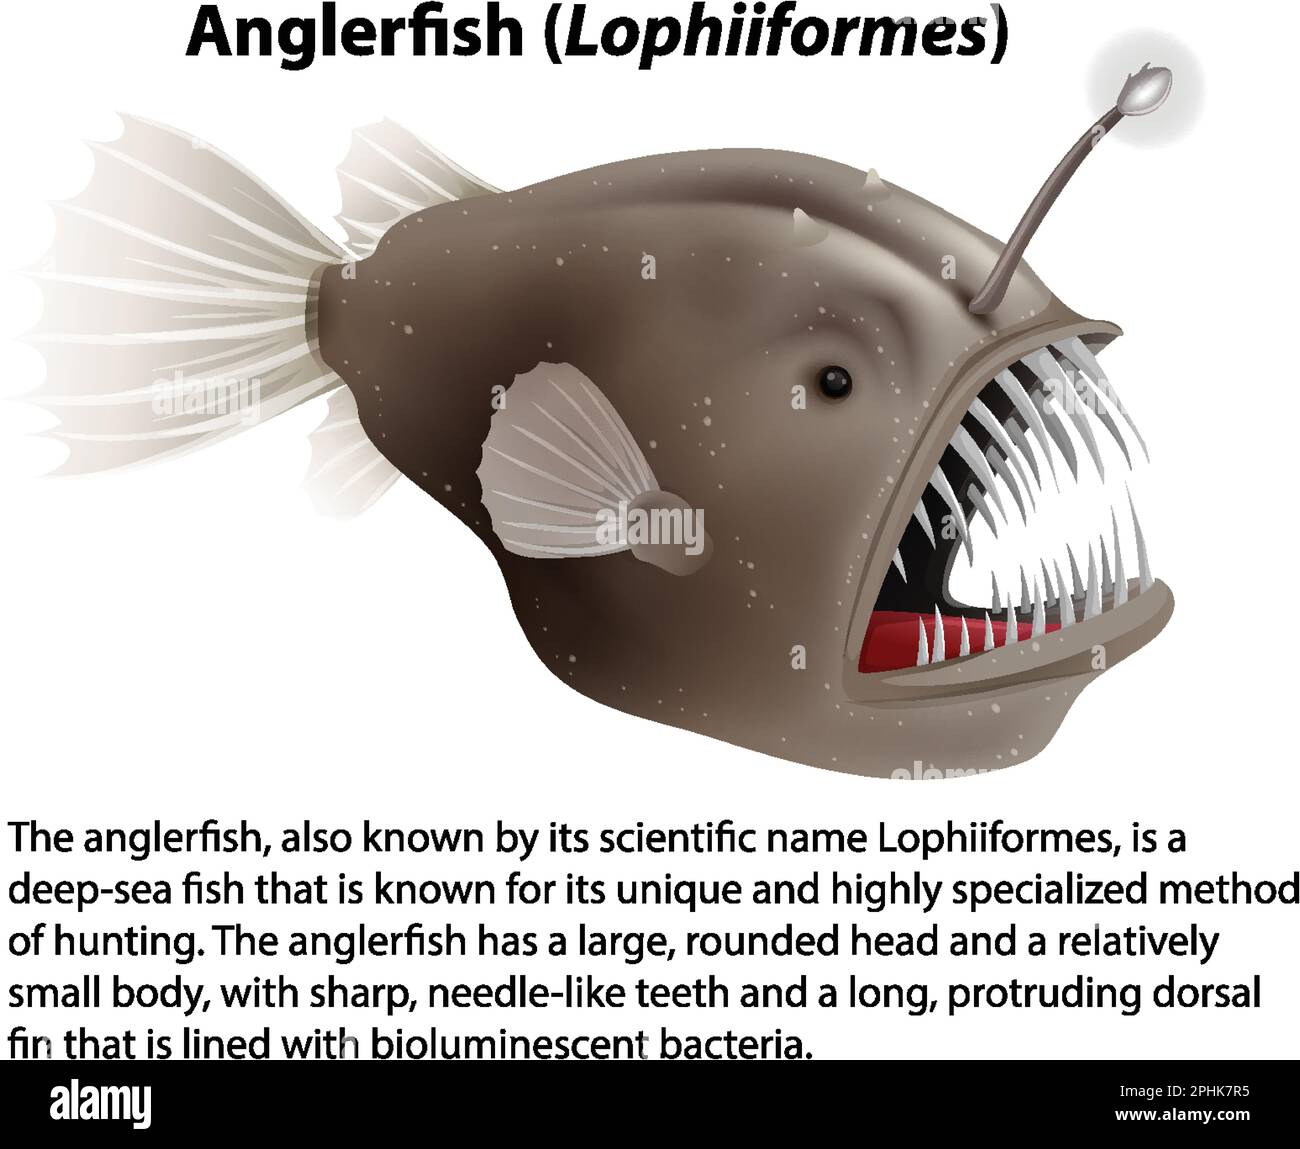 Anglerfish (Lophiiformes) avec illustration textuelle informative Illustration de Vecteur